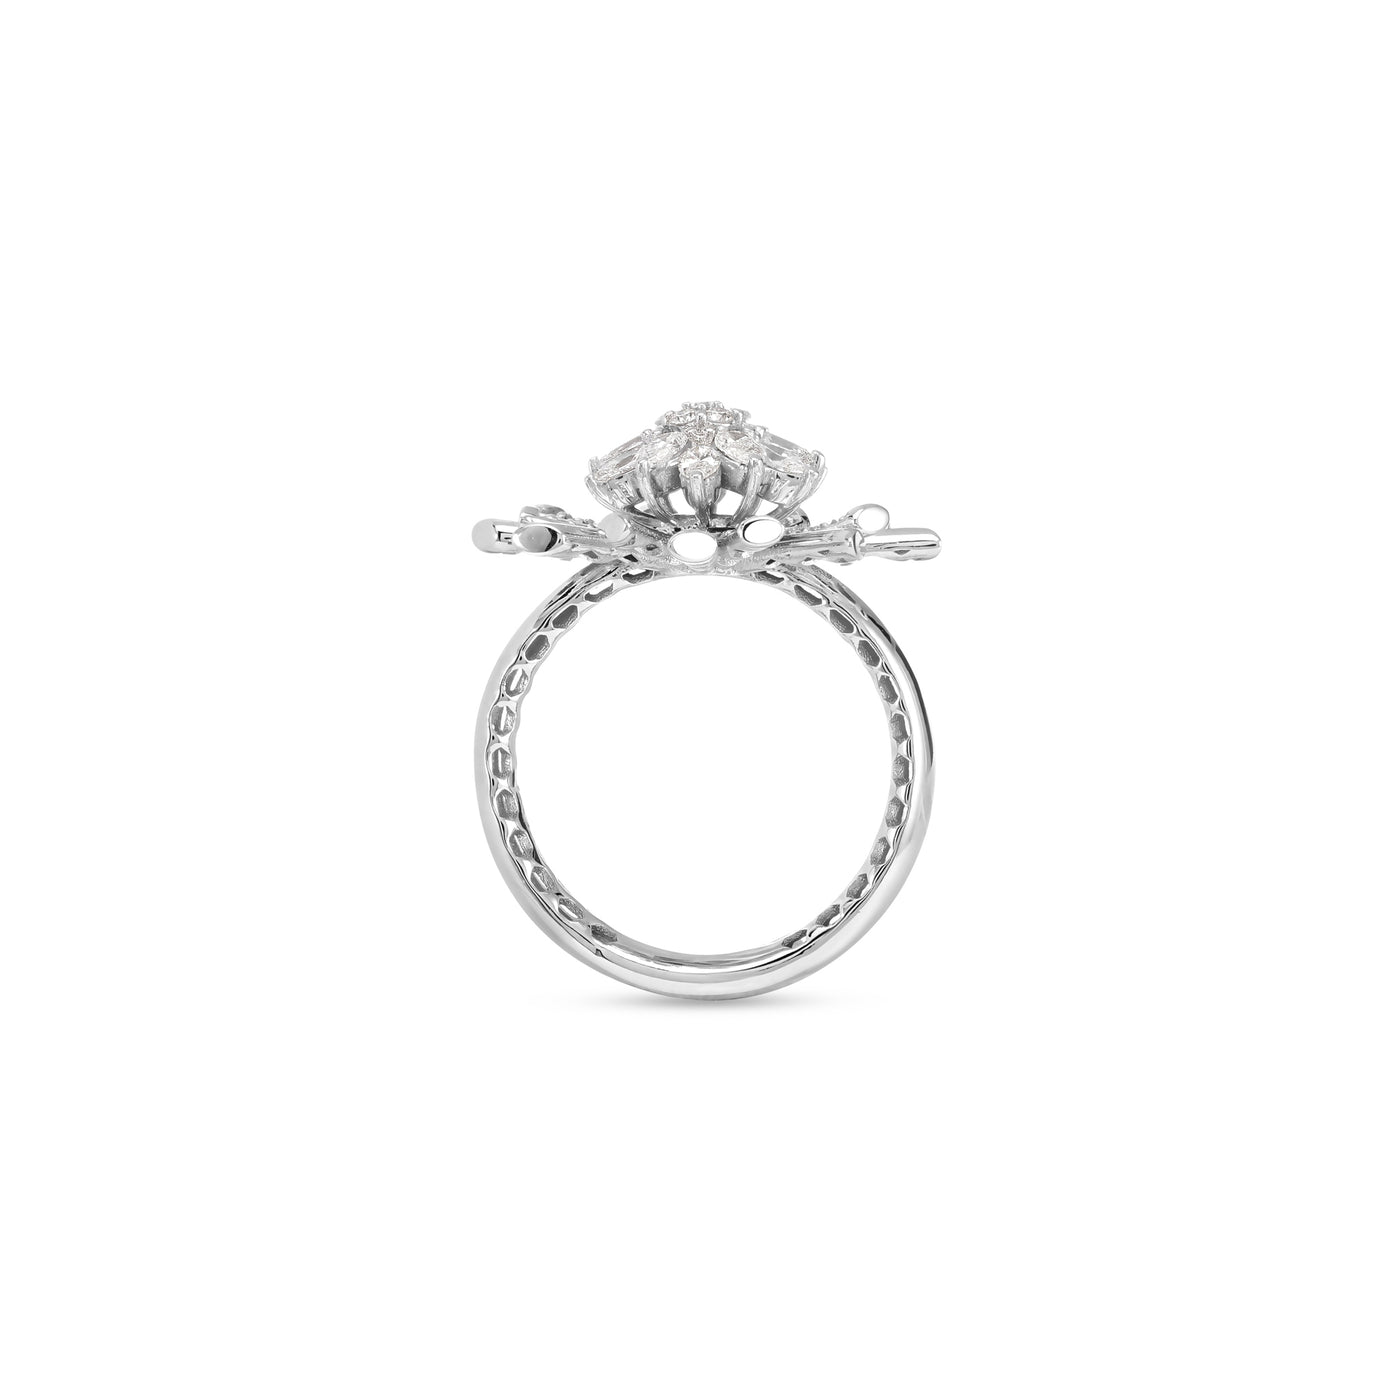 Soit Belle White Gold Pointed Diamond Ring: Graceful Sophistication